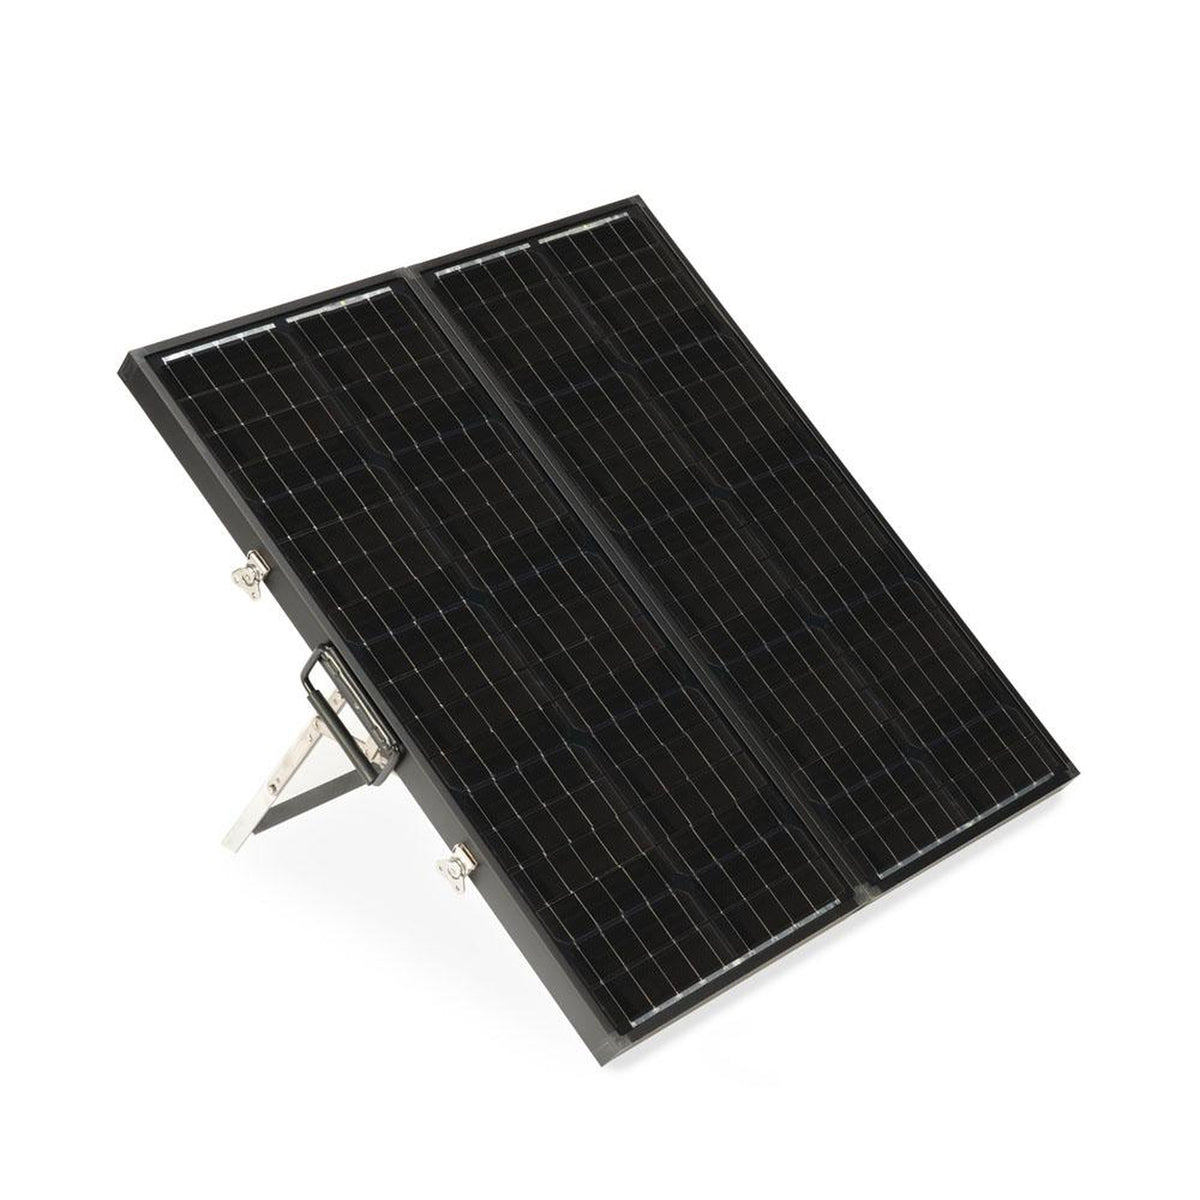 ZAMP solar 140 watt portable rv solar kit – YagerOutdoor Zamp 140 Watt Portable Solar Panel Review